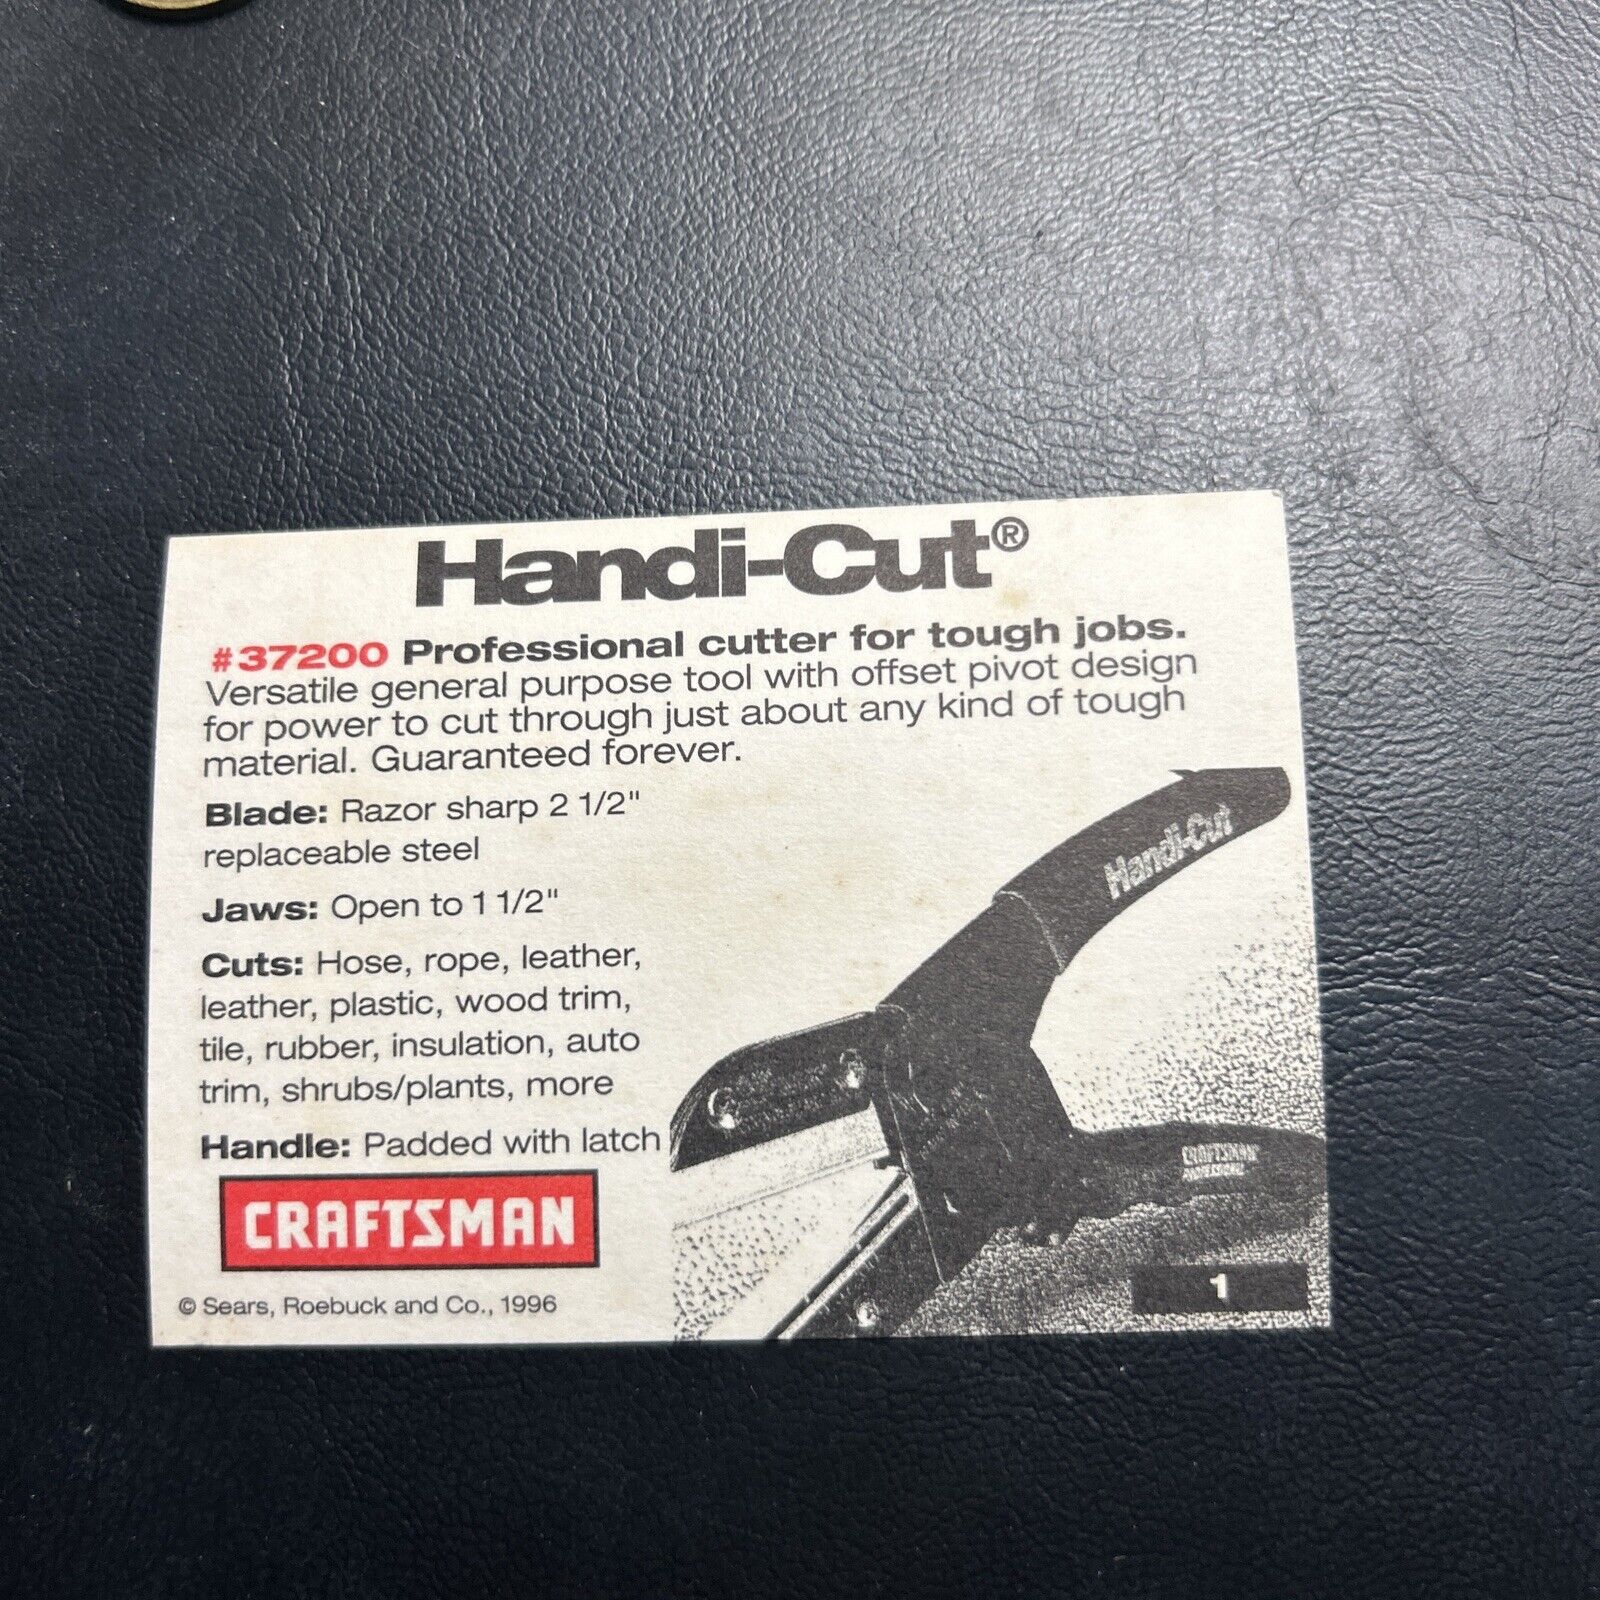 Jb98 Craftsman Card Sears 1996/97 #1 Handy Cut 37200 Handi